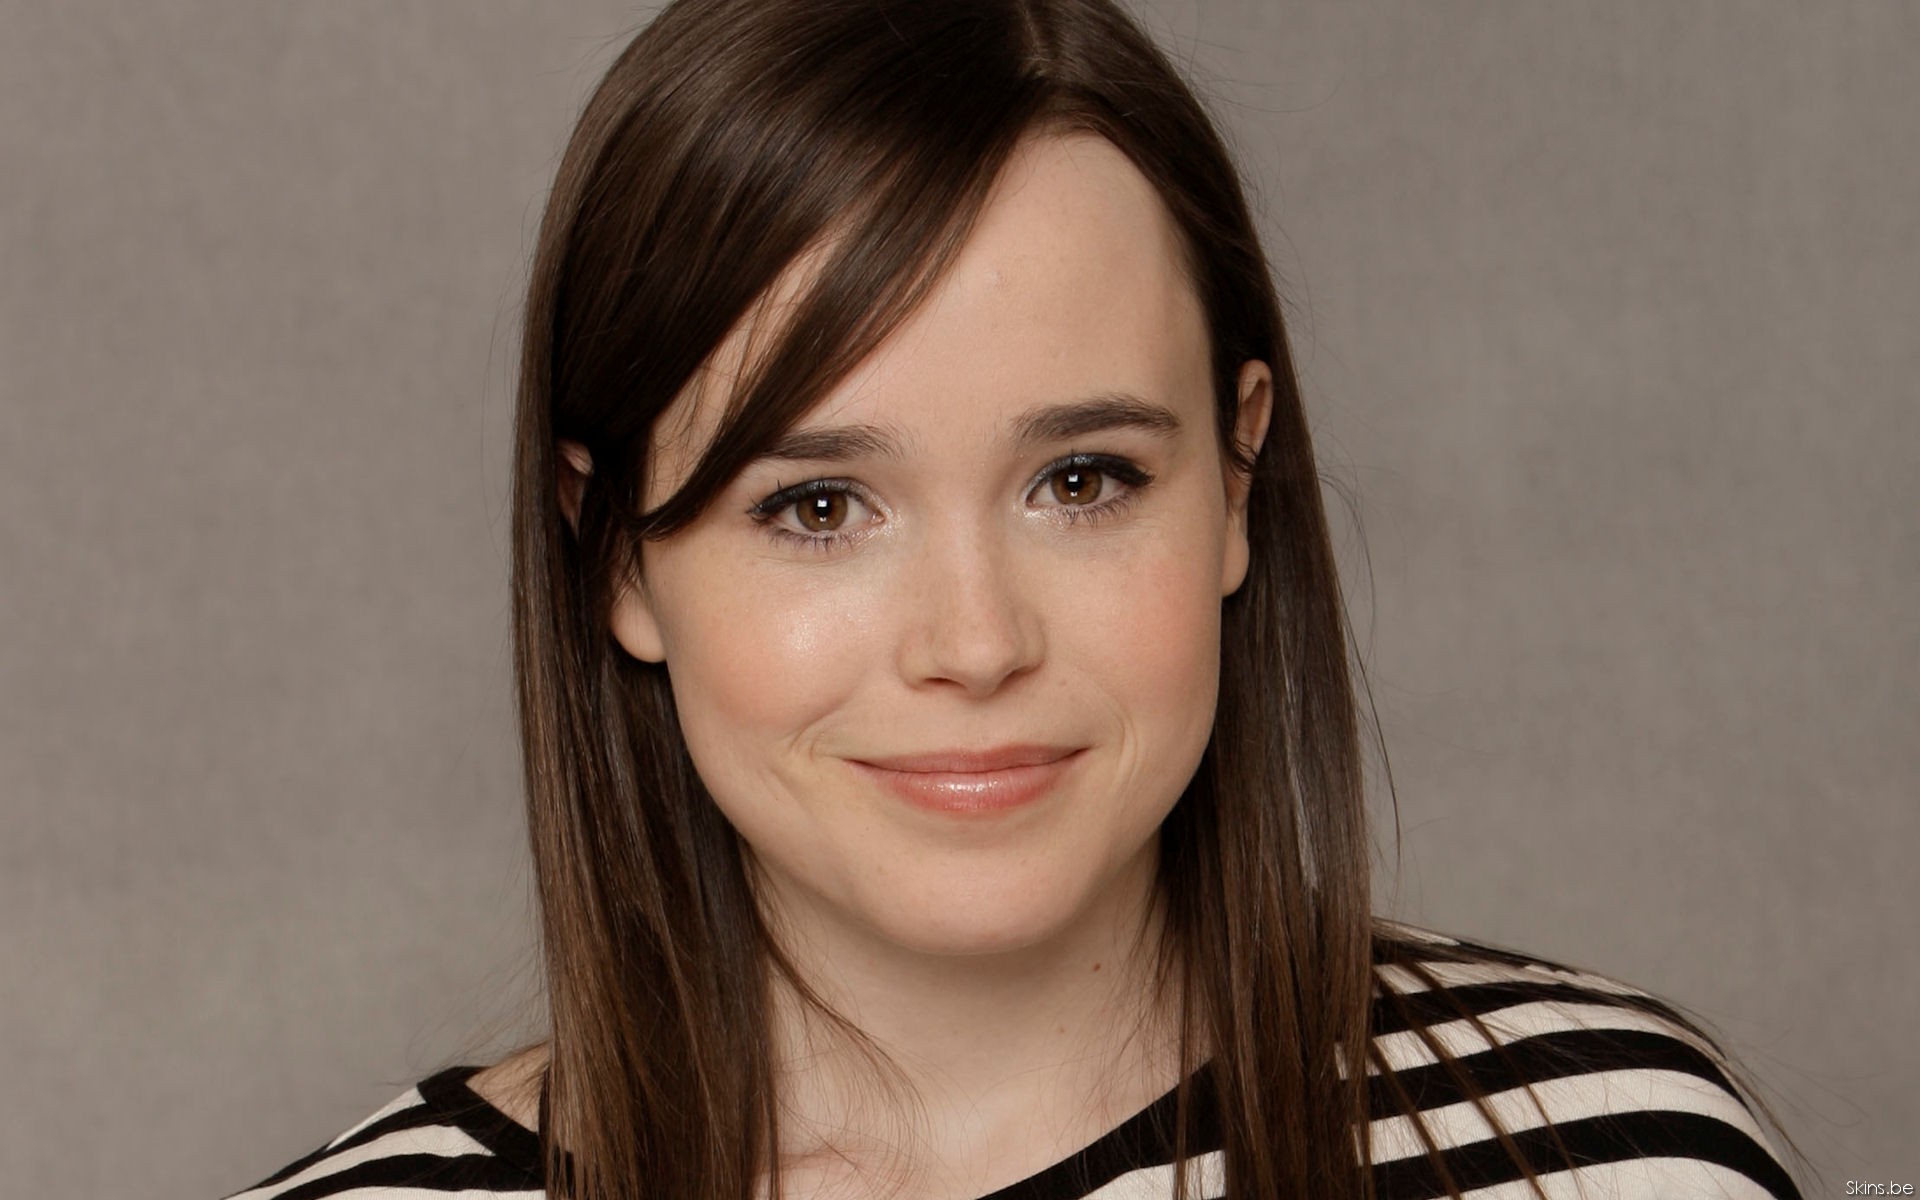 Ellen Page Pictures Hotness Rating 9 56 10